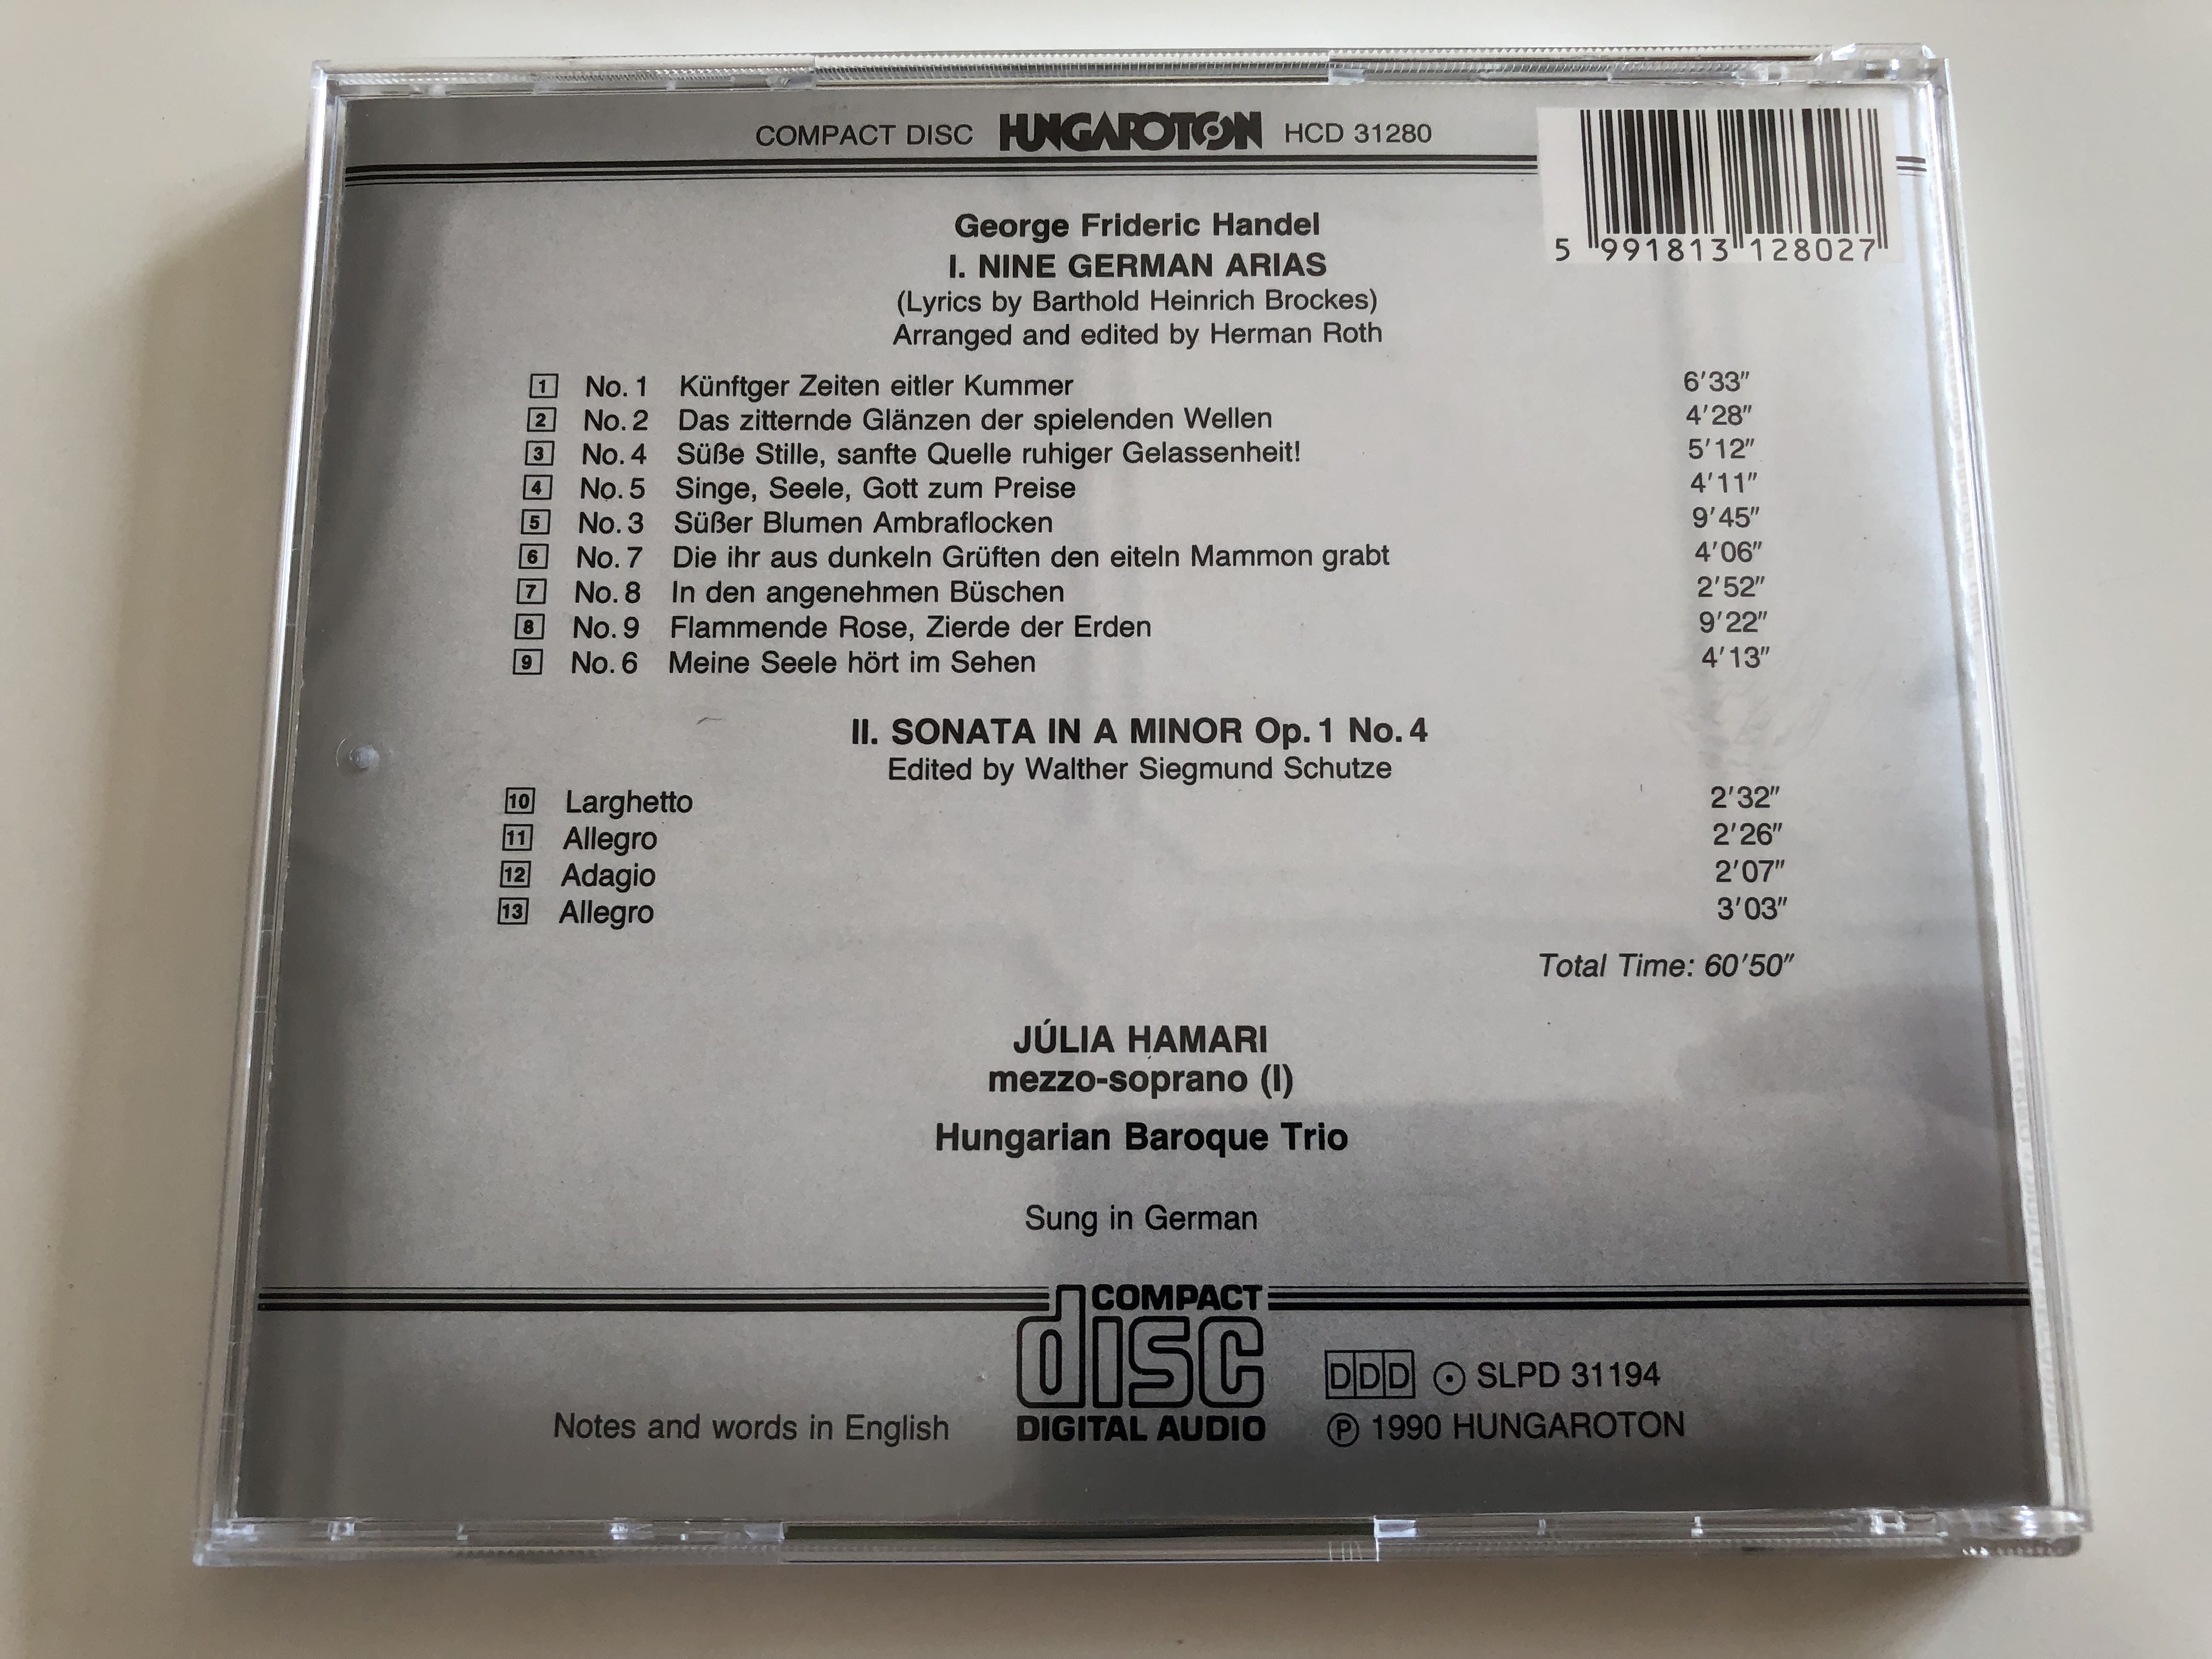 george-frideric-handel-9-german-arias-sonata-in-a-minor-j-lia-hamari-mezzo-soprano-hungarian-baroque-trio-hungaroton-classic-audio-cd-1990-hcd-31280-10-.jpg